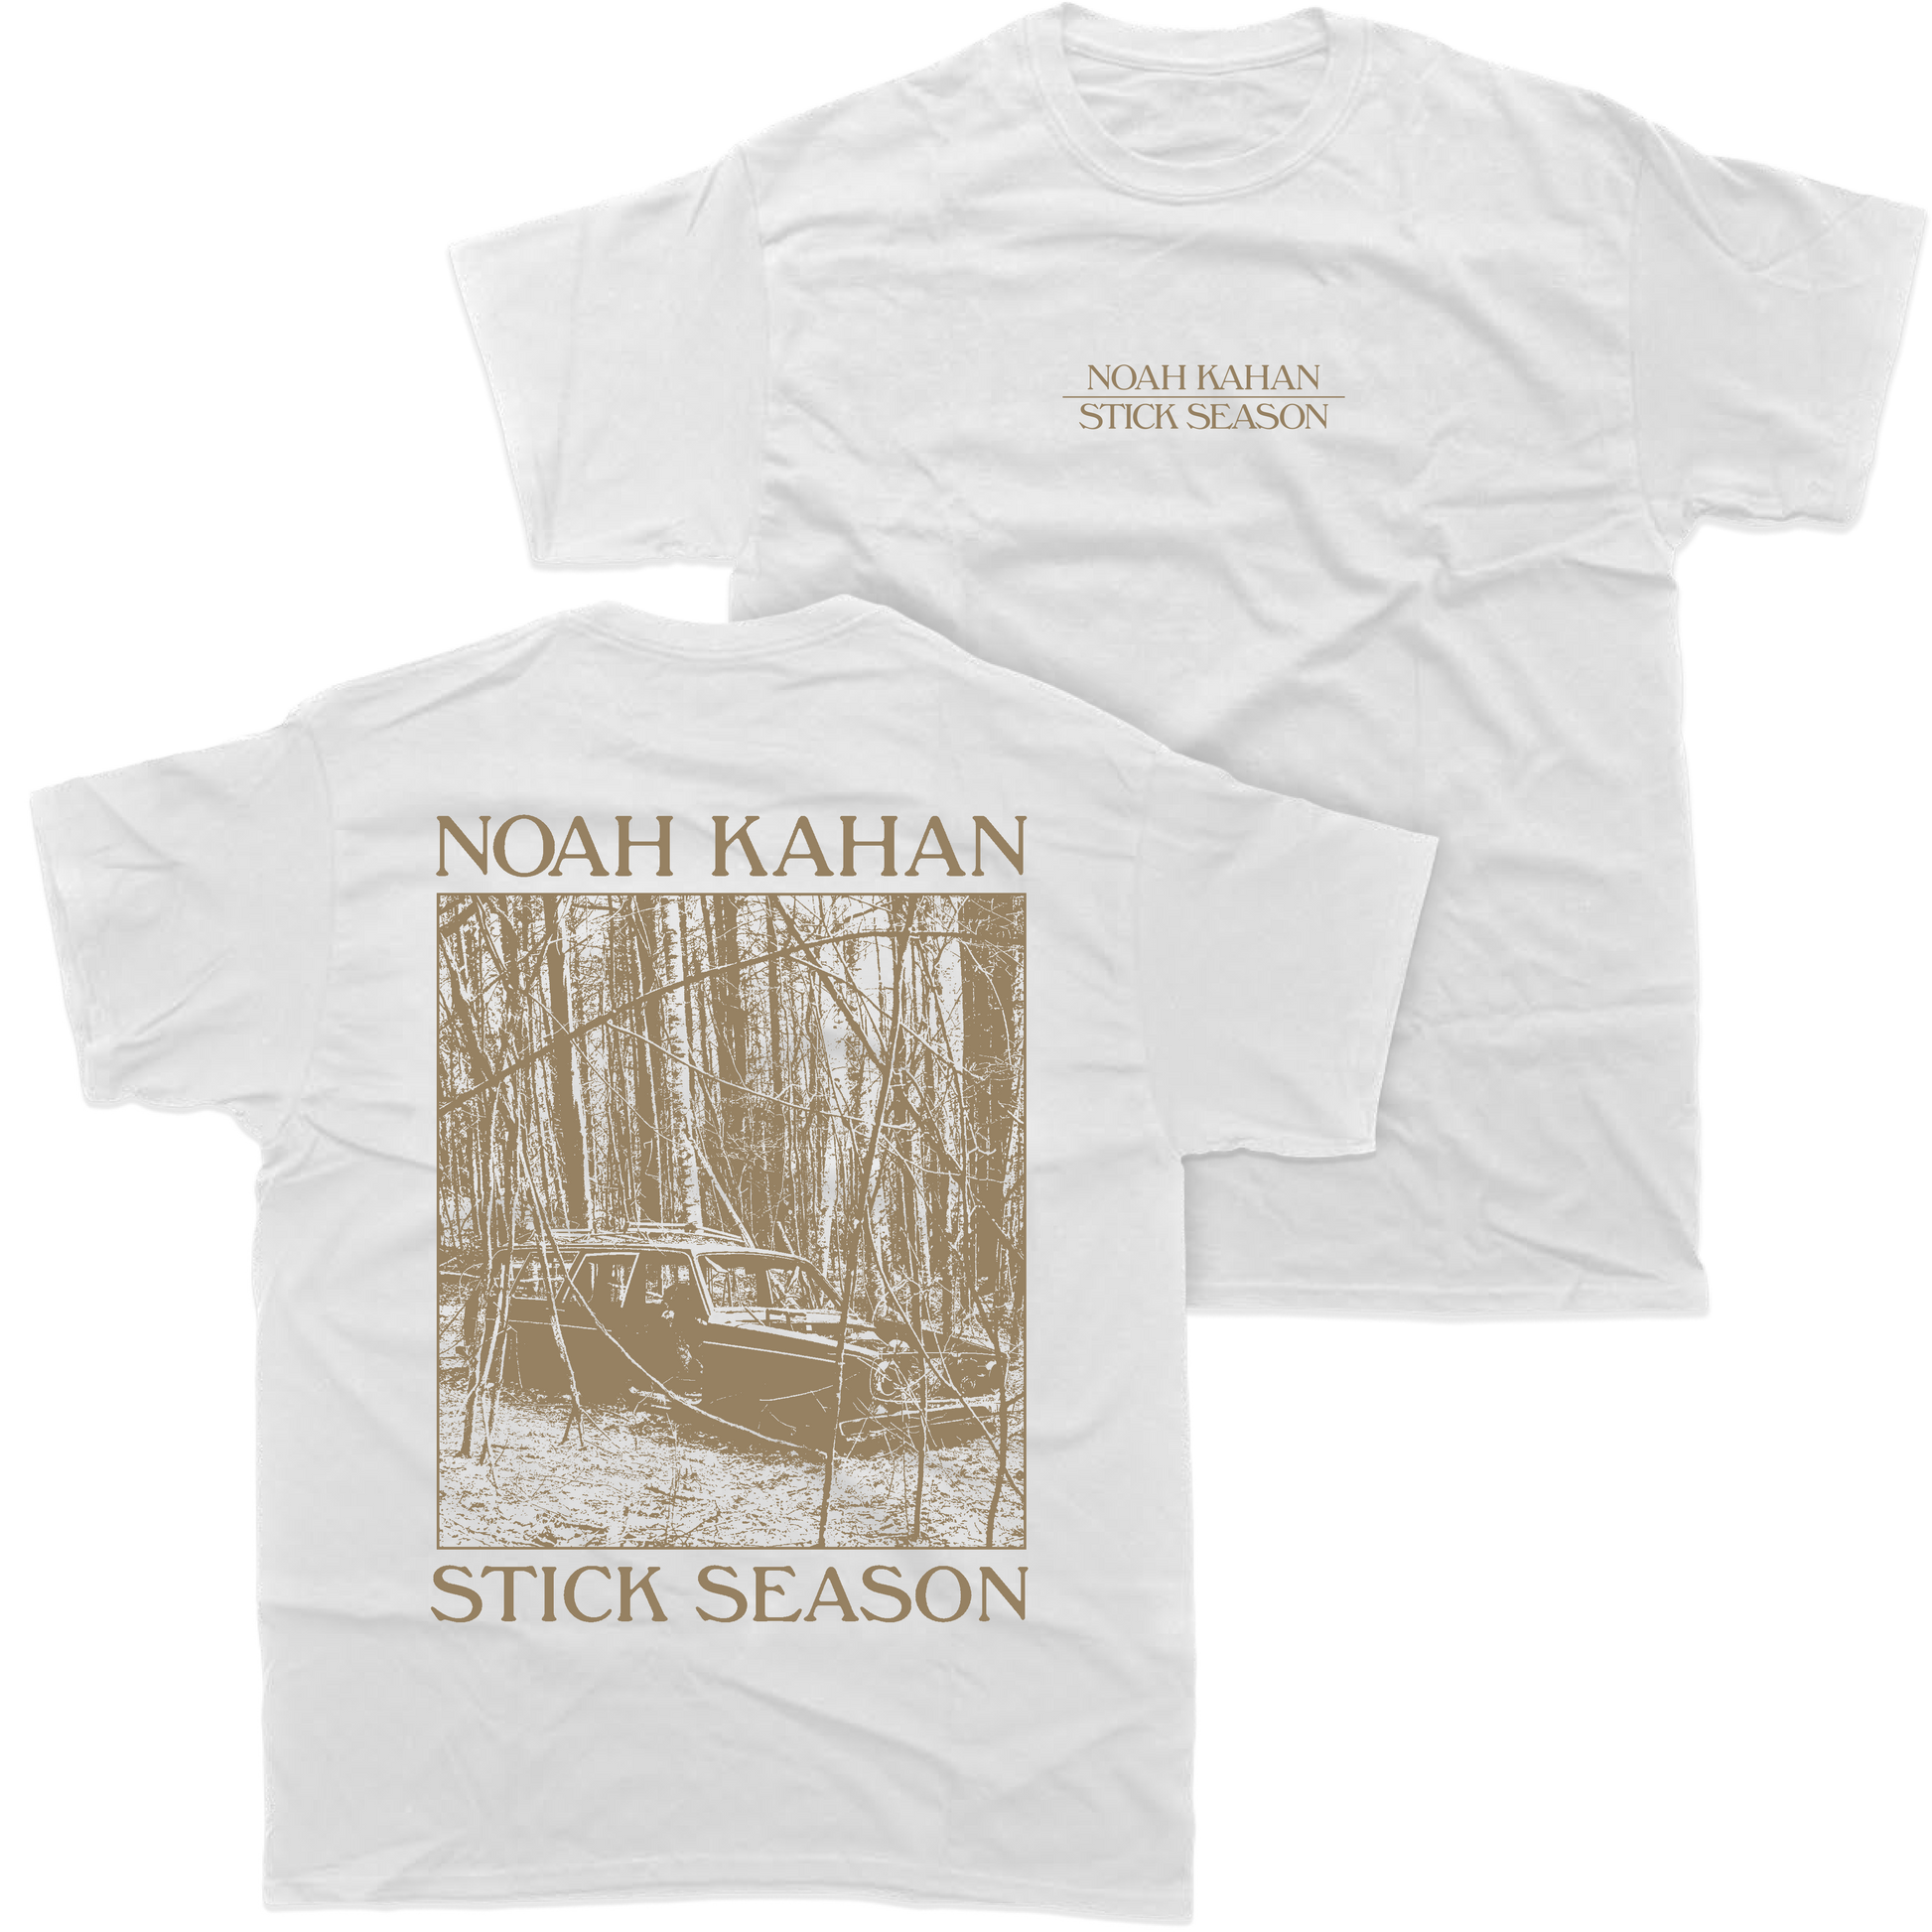 Noah Kahan Stick Season white t-shirt